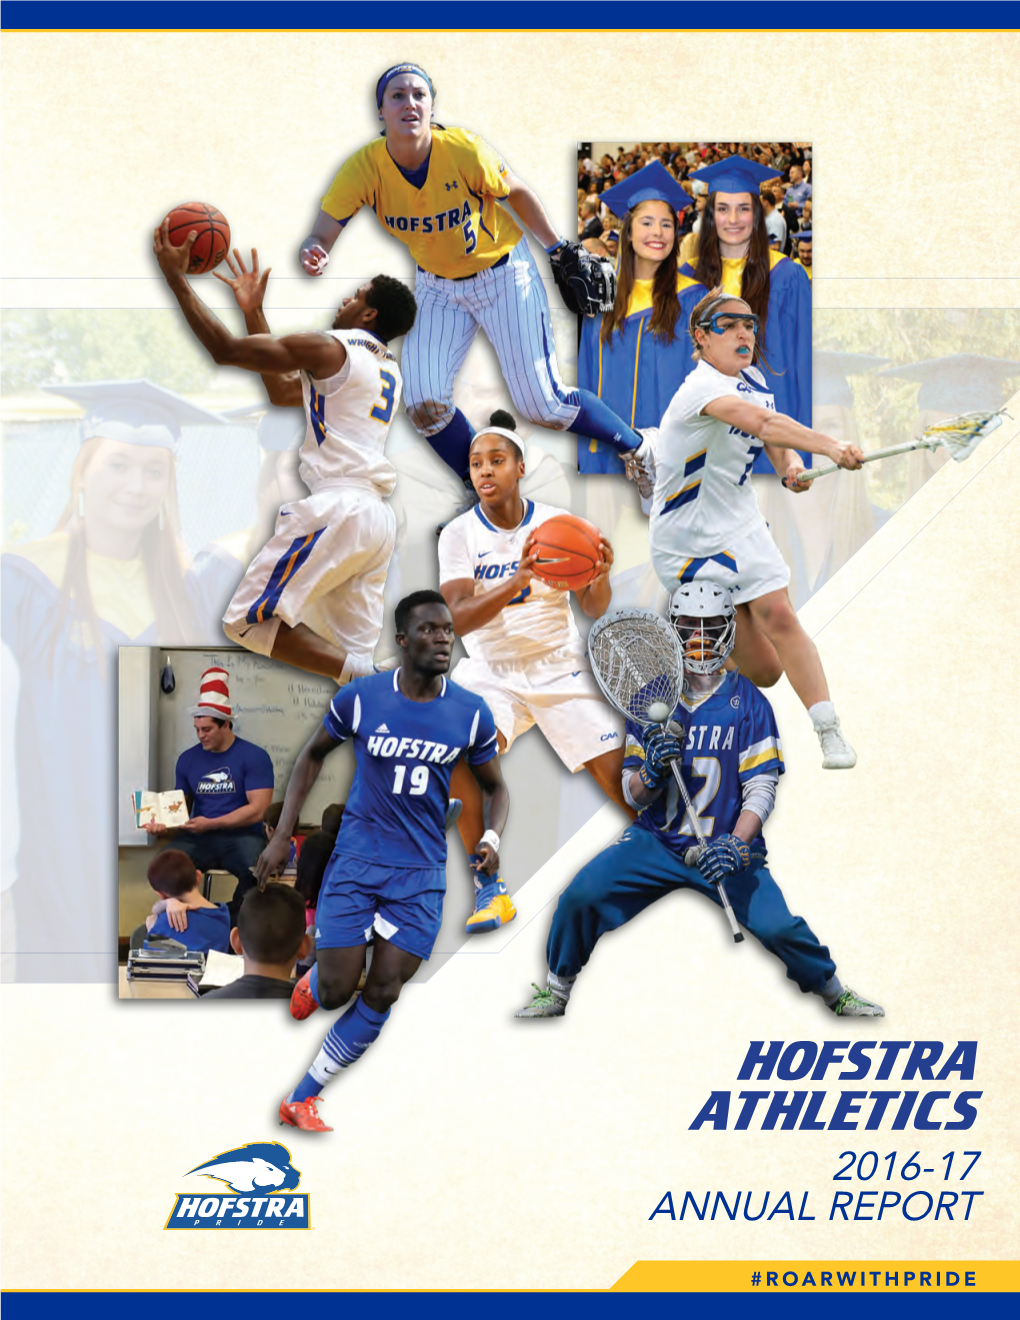 Hofstra Athletics 2016-17 Annual Report